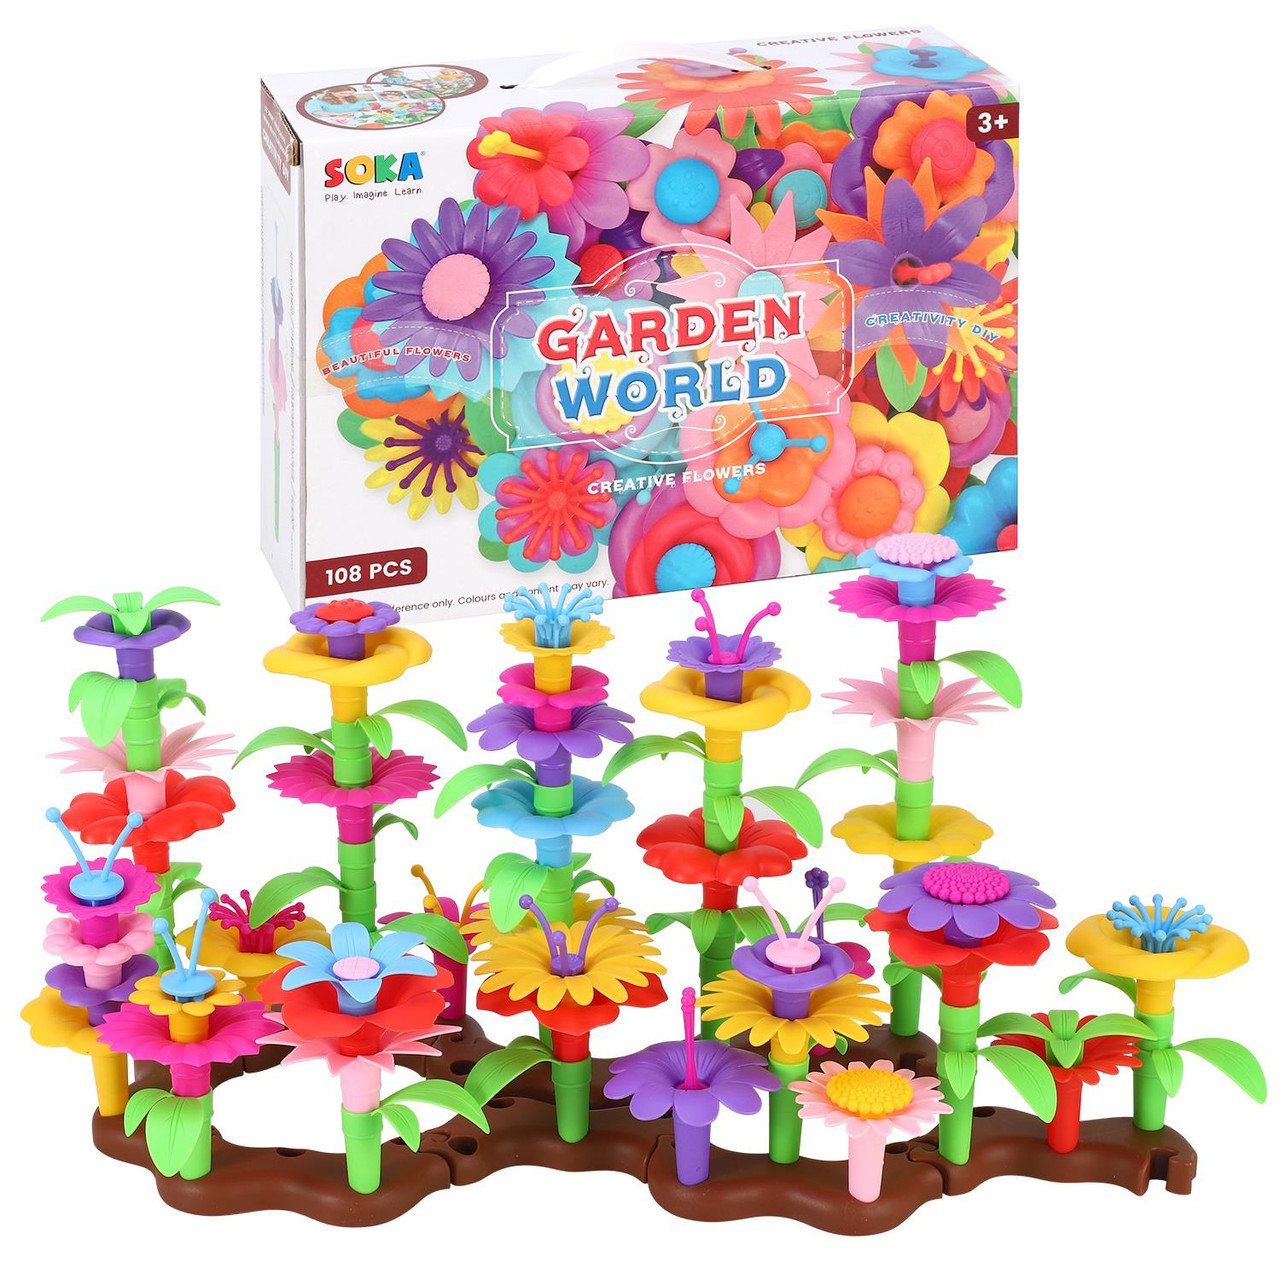 SOKA Garden World Creative Flowers 108 PCS Flower Garden Building Toy Set  Floral Arrangement Bouquet Blocks